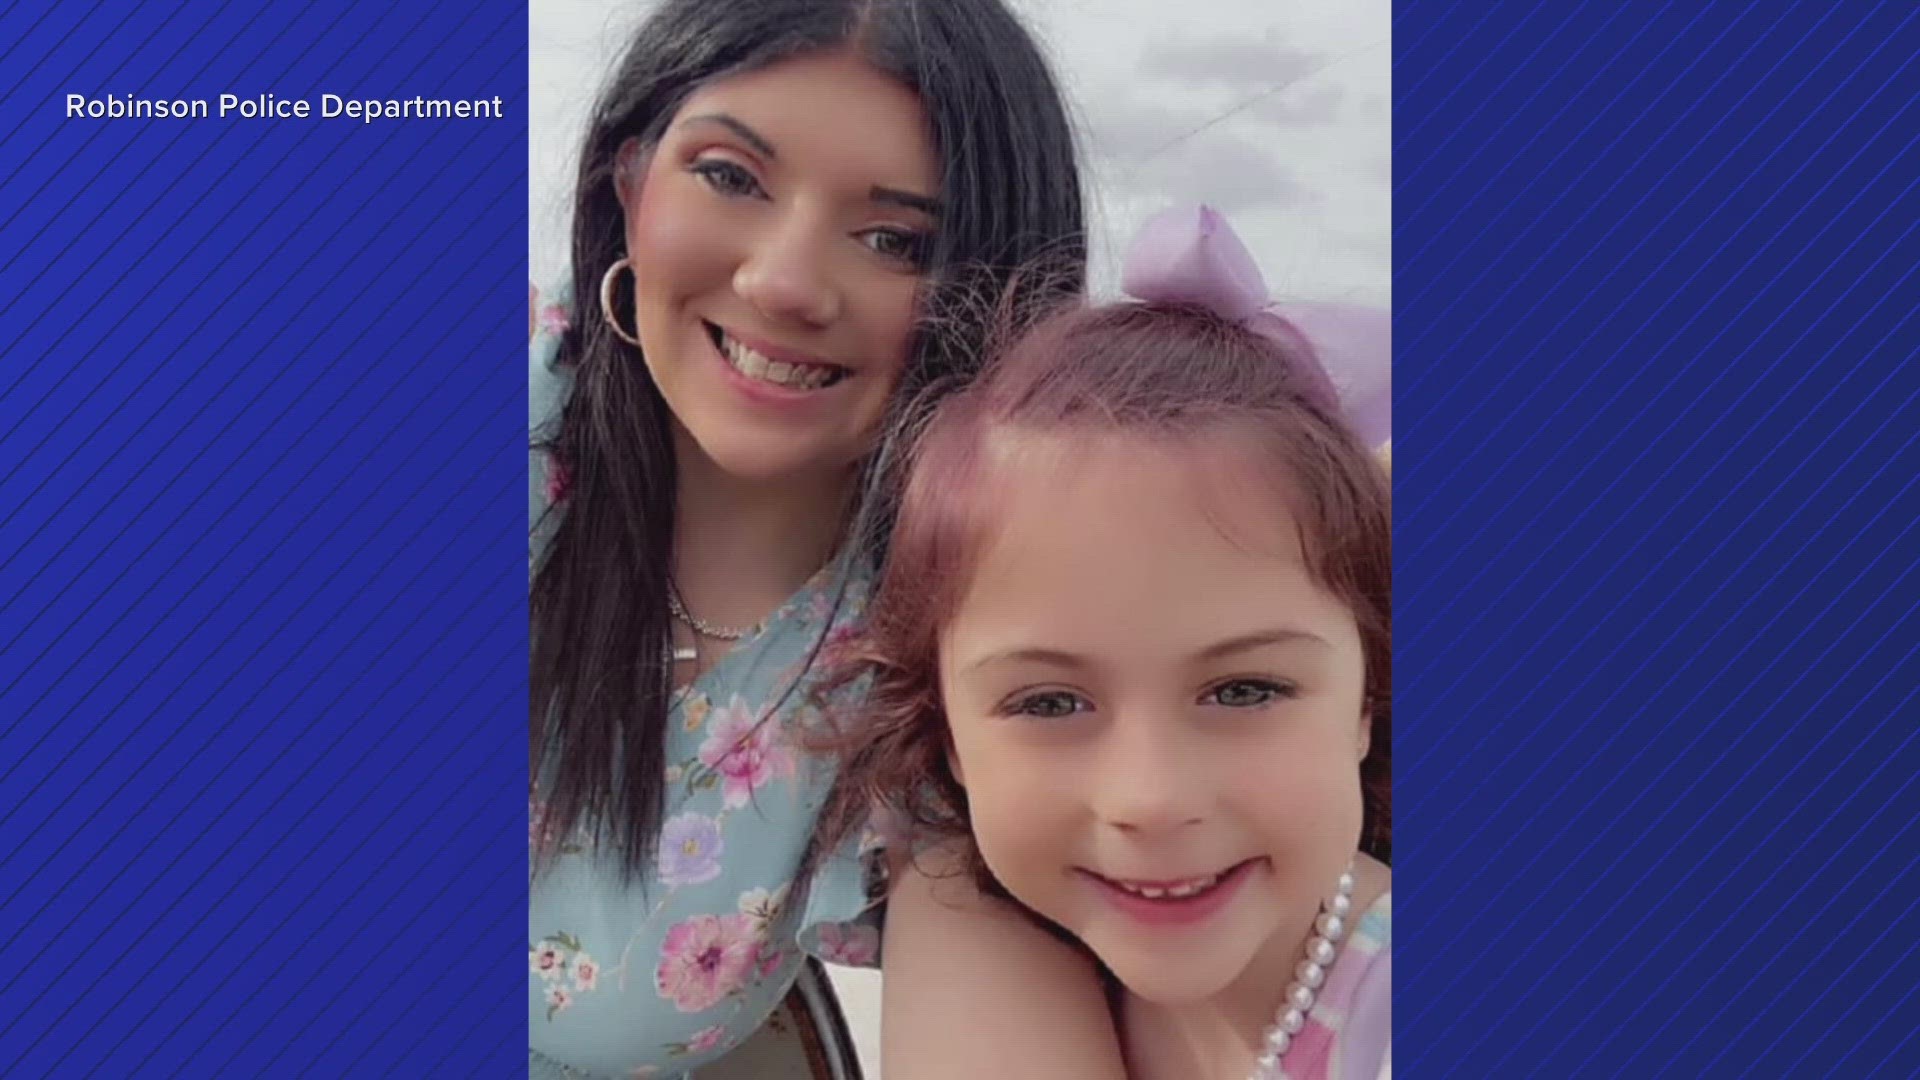 Police said 33-year-old Lauren Bonvillian and 4-year-old Savannah Bagley were last seen leaving Corsicana towards Robinson on April 14.